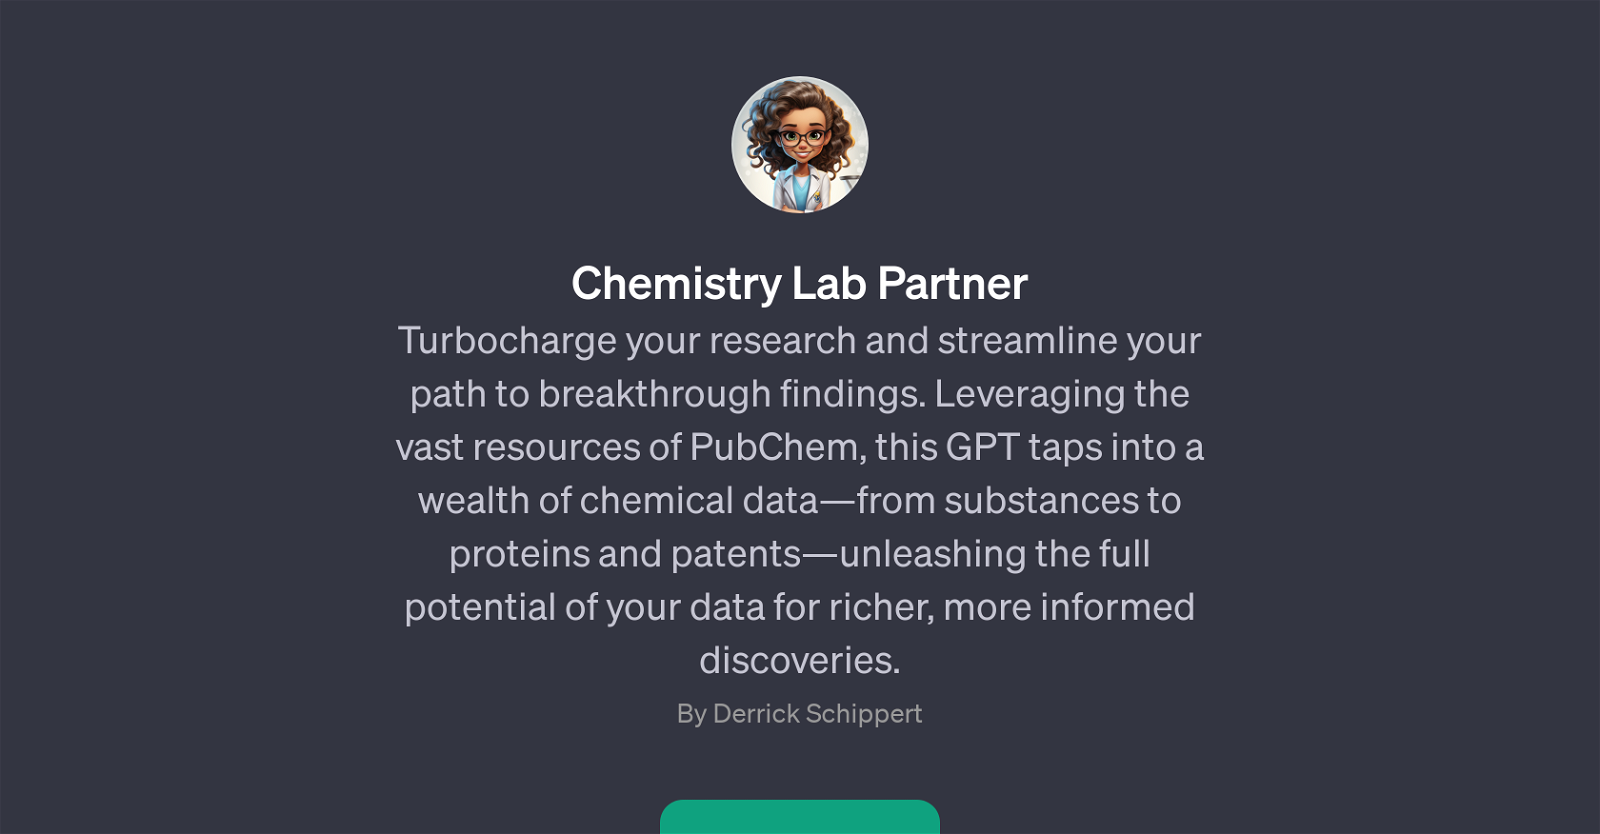 Chemistry Lab Partner website